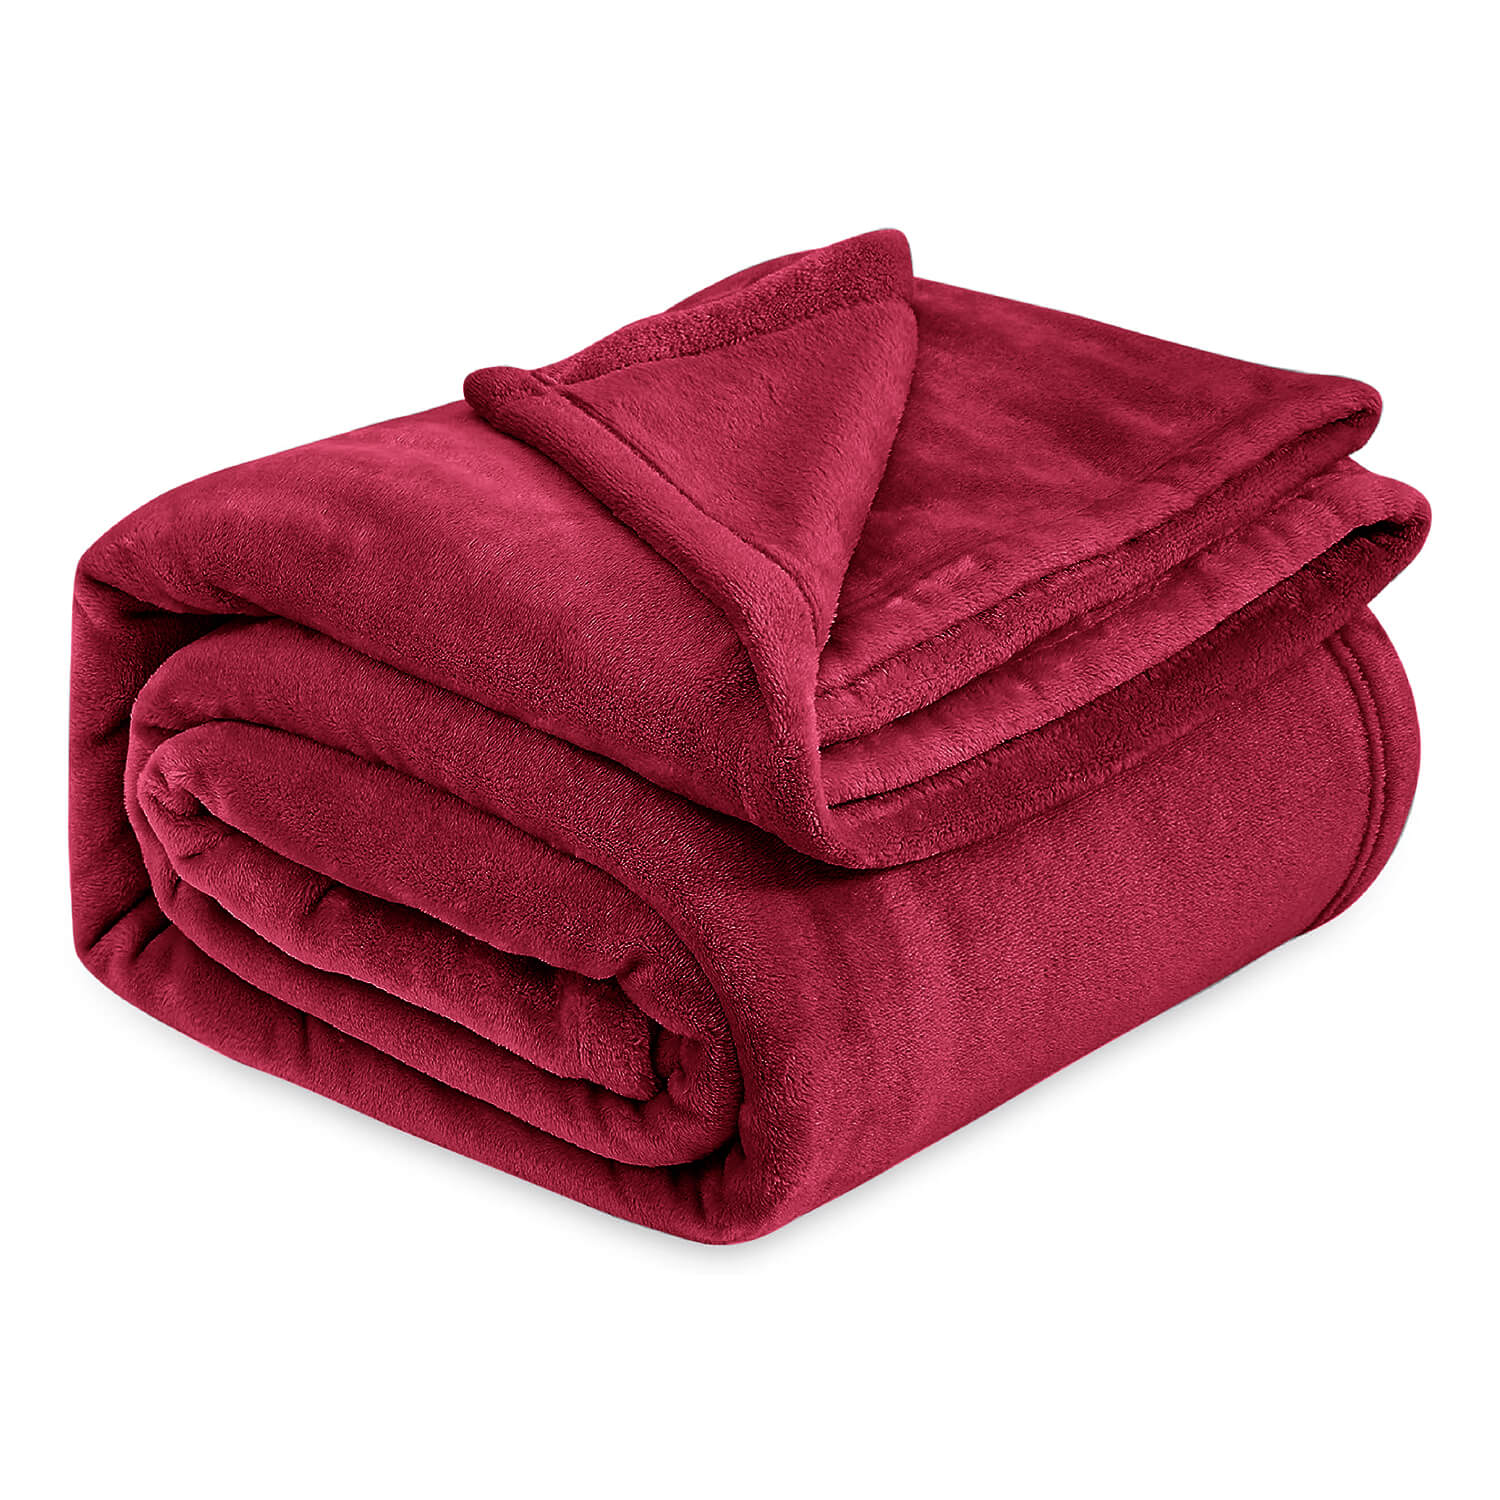 Burgundy Fleece Throw Blanket